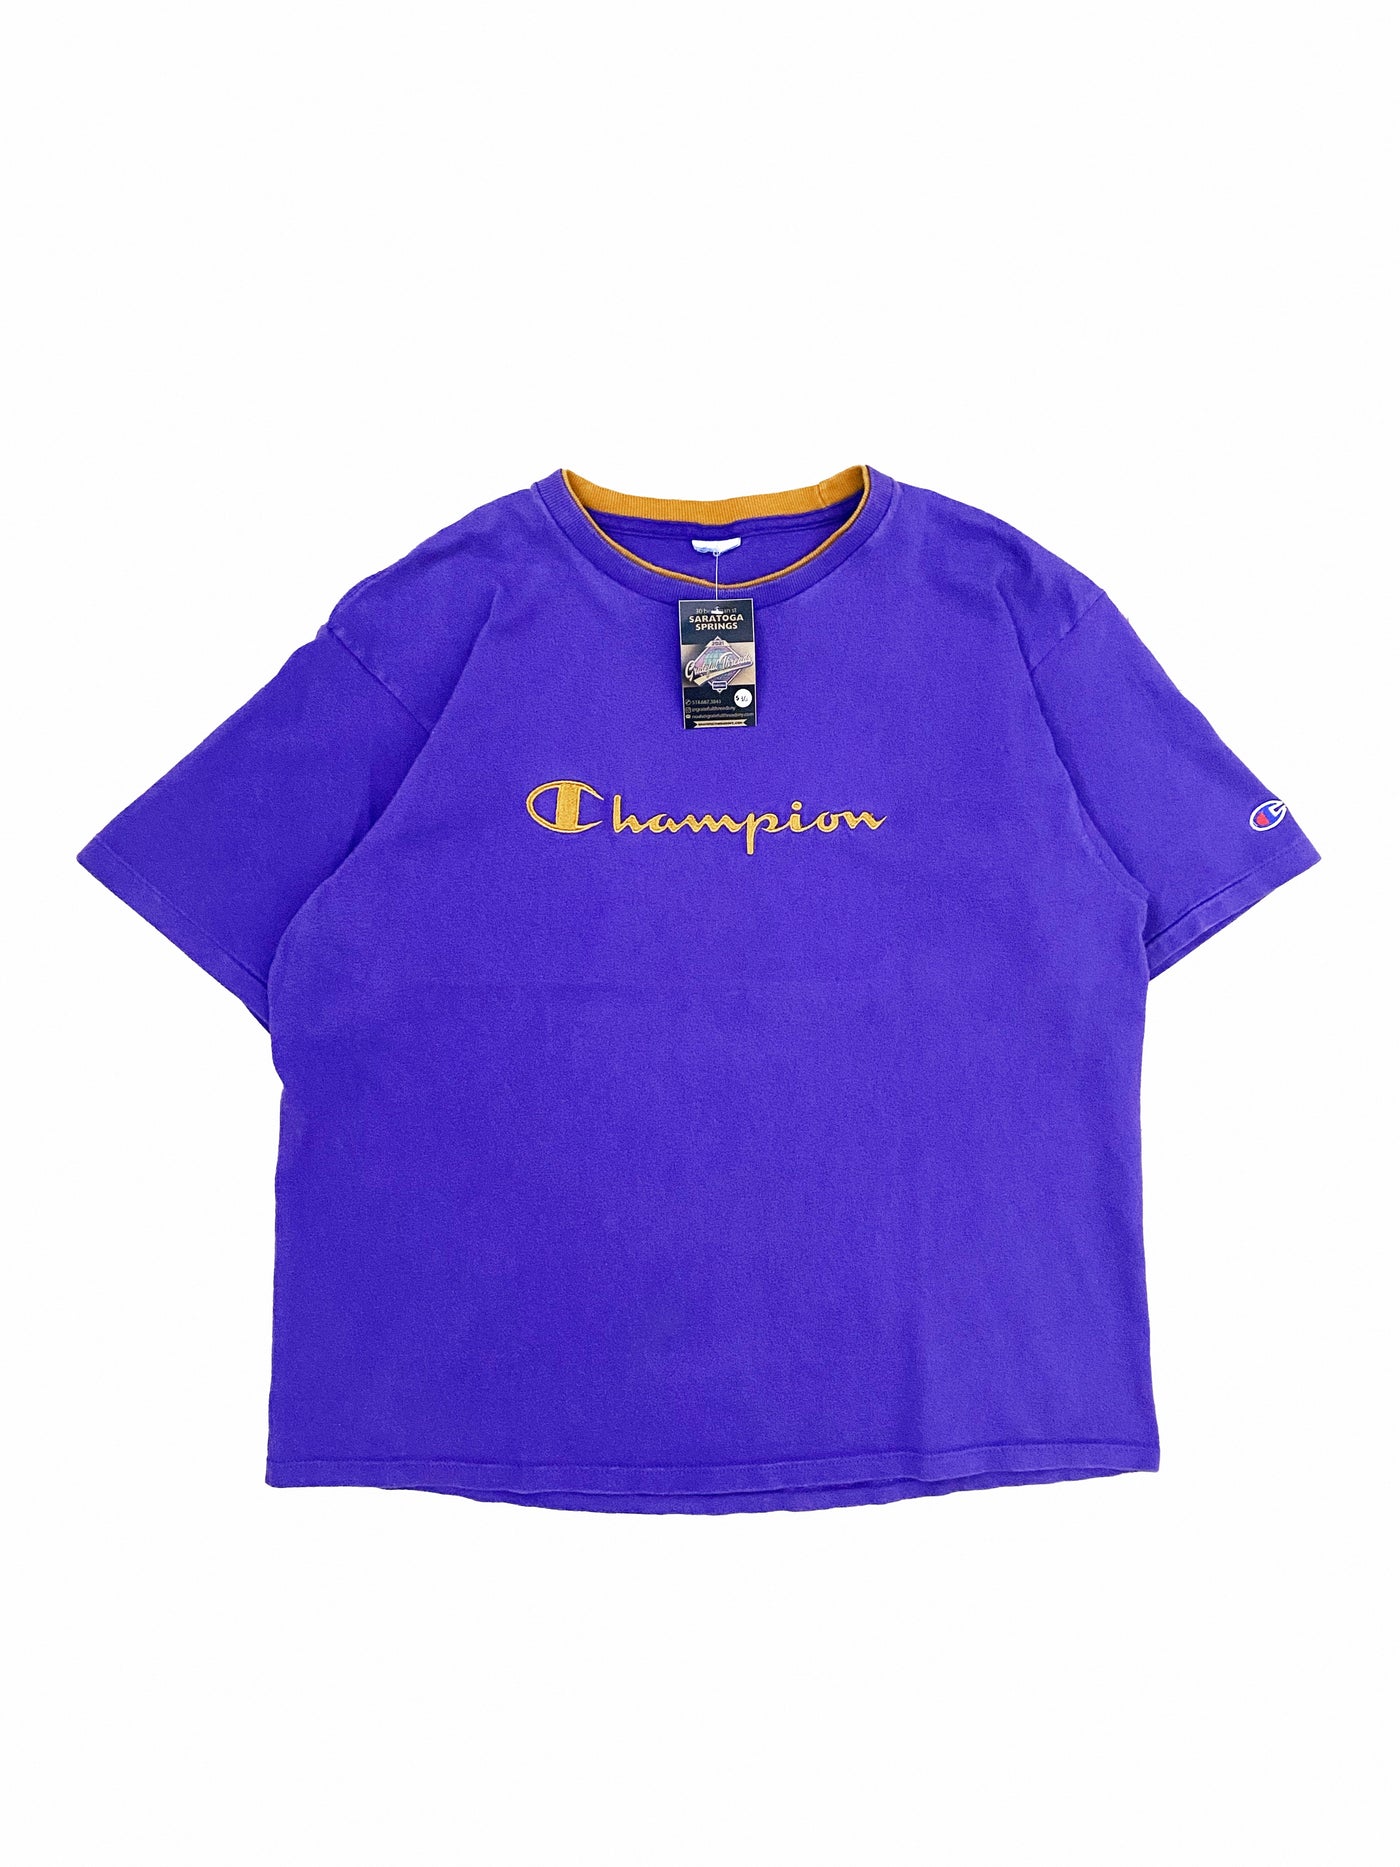 Vintage 90s Champion Spellout T-Shirt